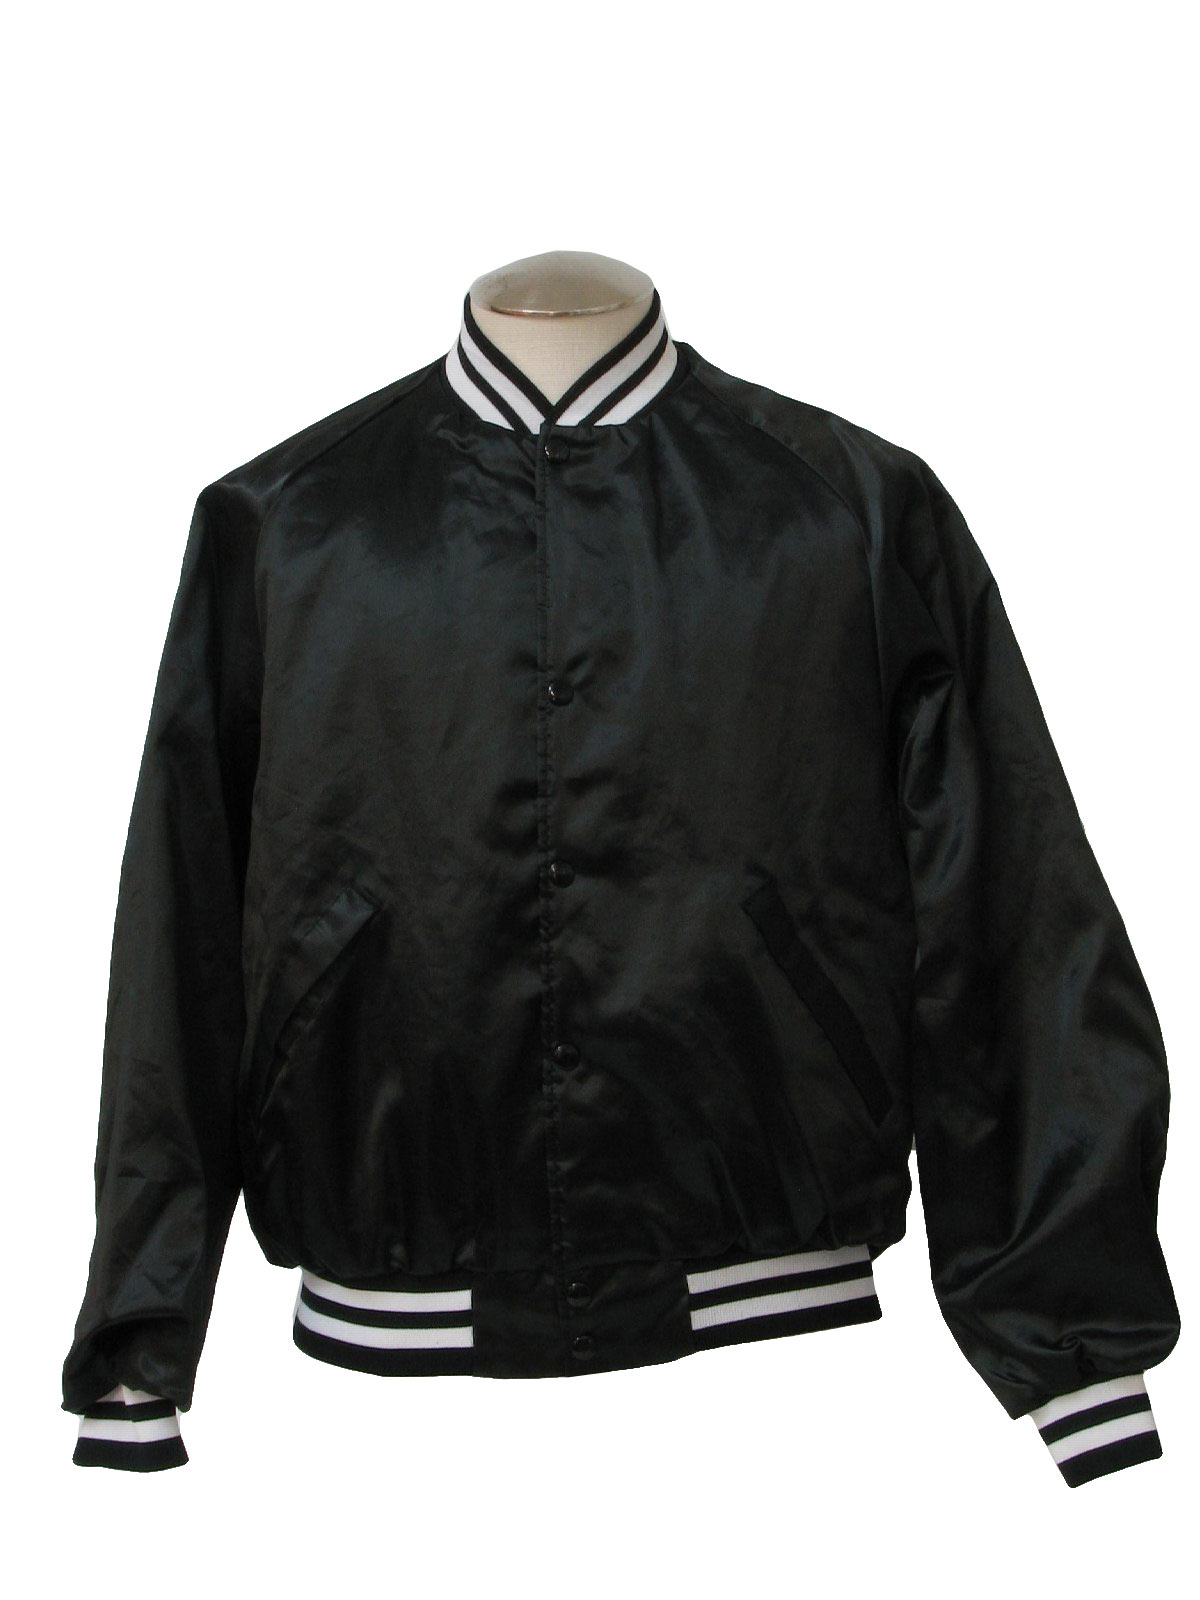 Retro 80's Jacket: 80s -Dunbrook- Mens black and white nylon satin with ...